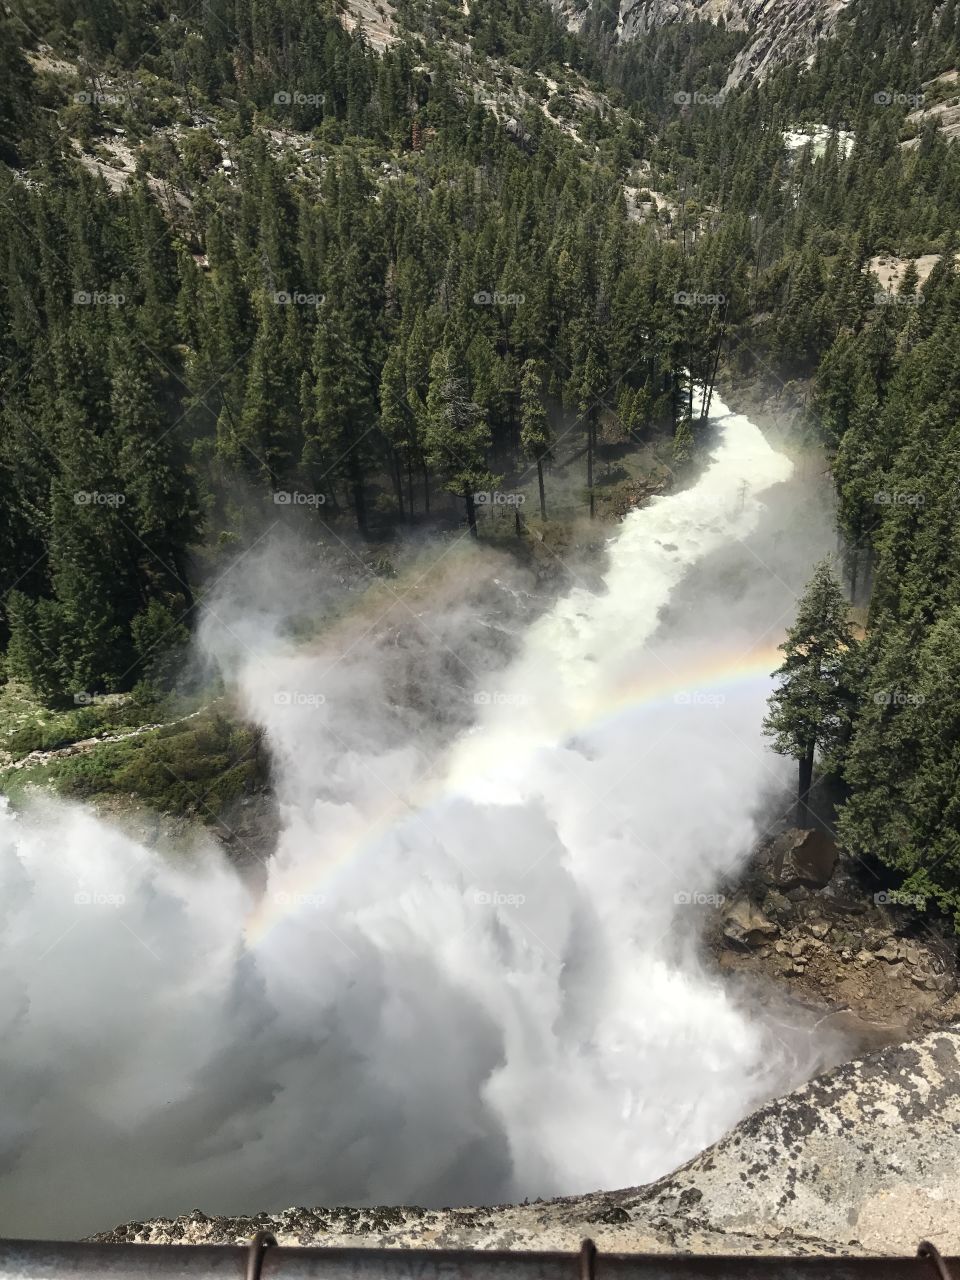 Waterfall in Yosemite 